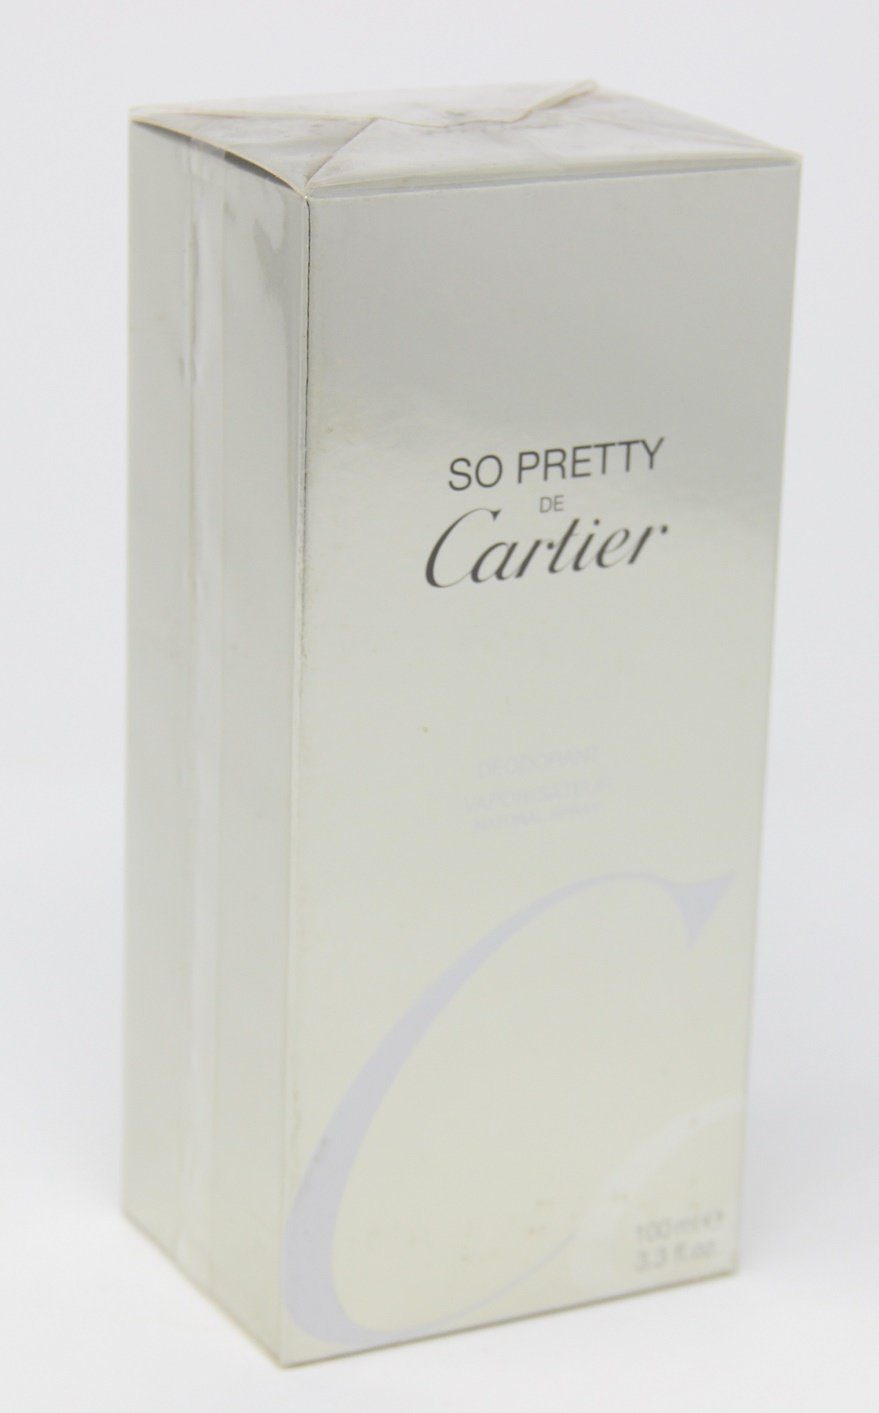 Diesel Cartier Deodorant Cartier So Pretty Körperspray Spray 100ml